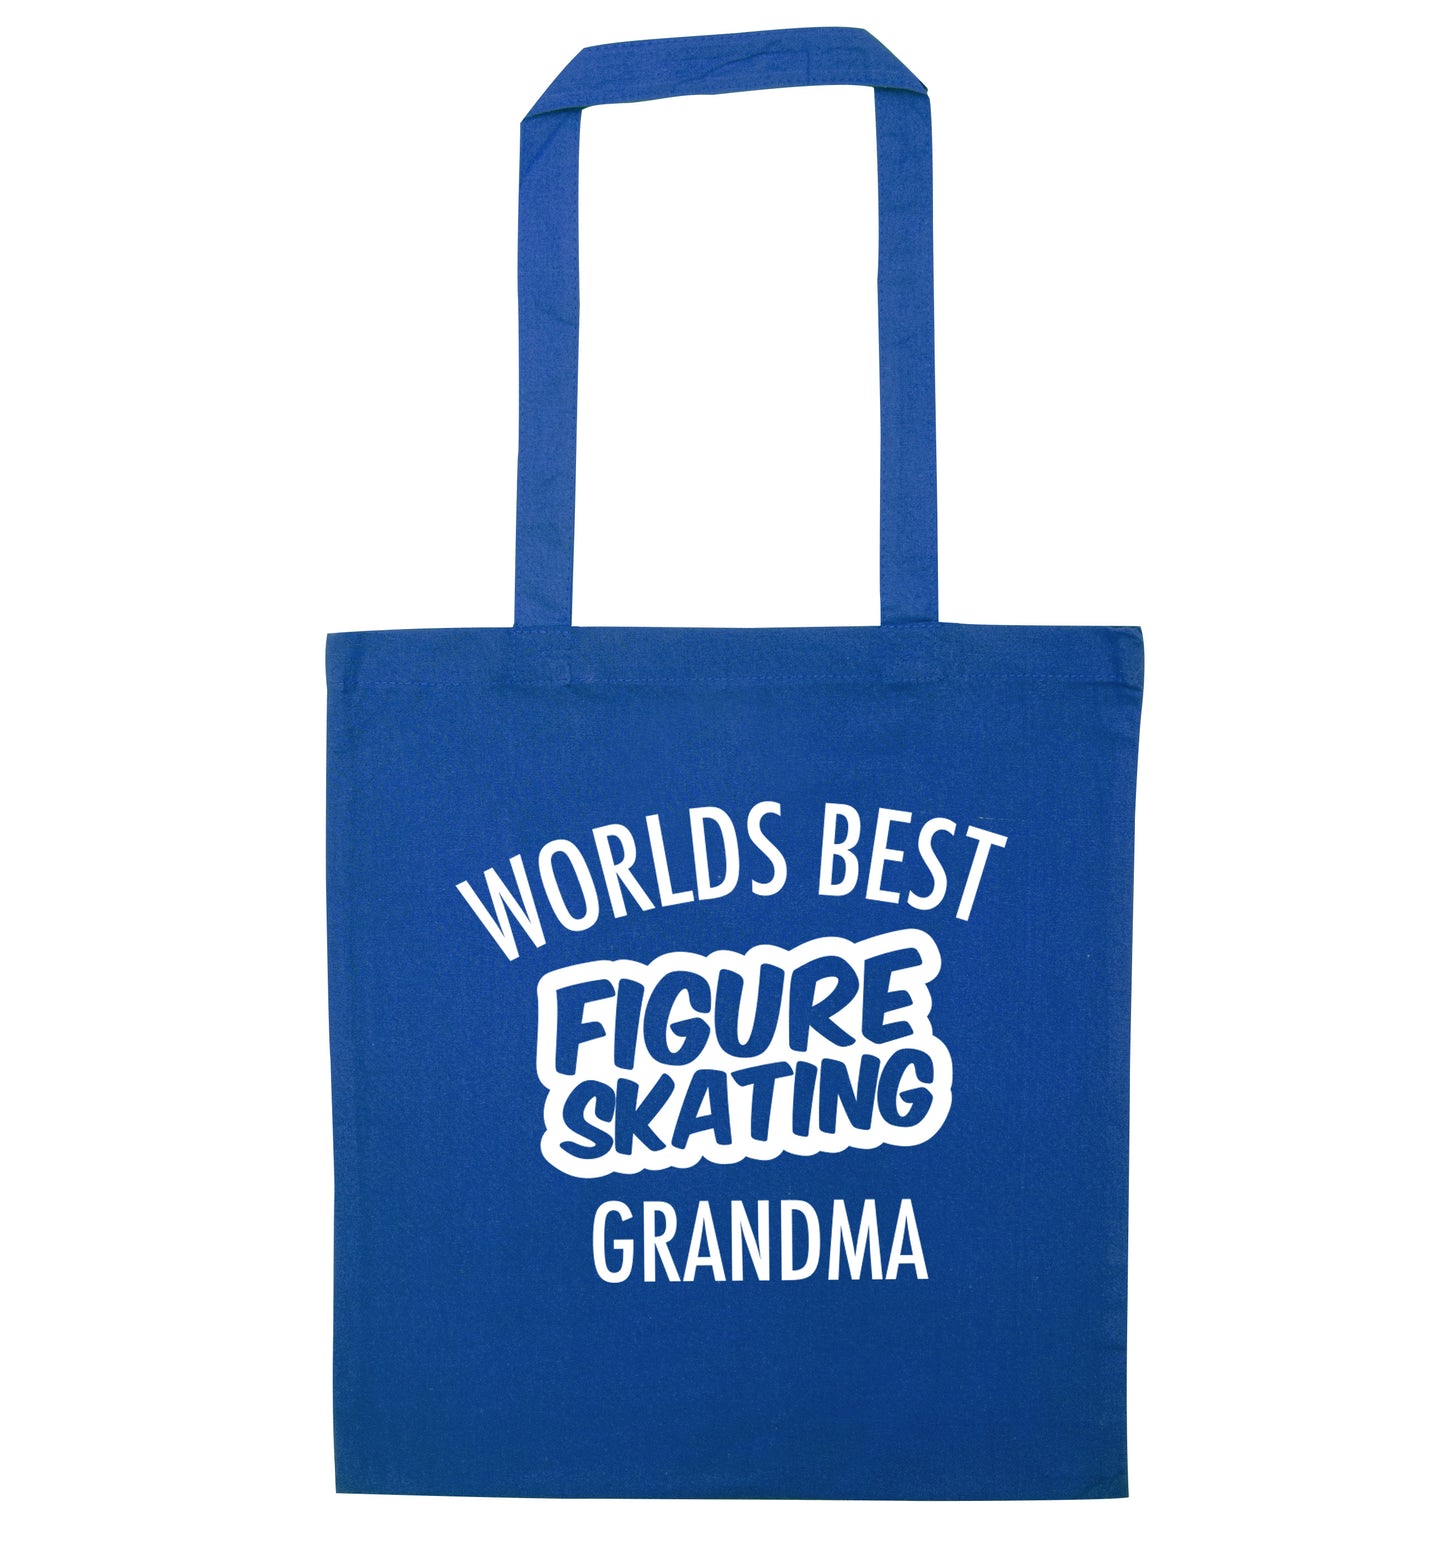 Worlds best figure skating grandma blue tote bag